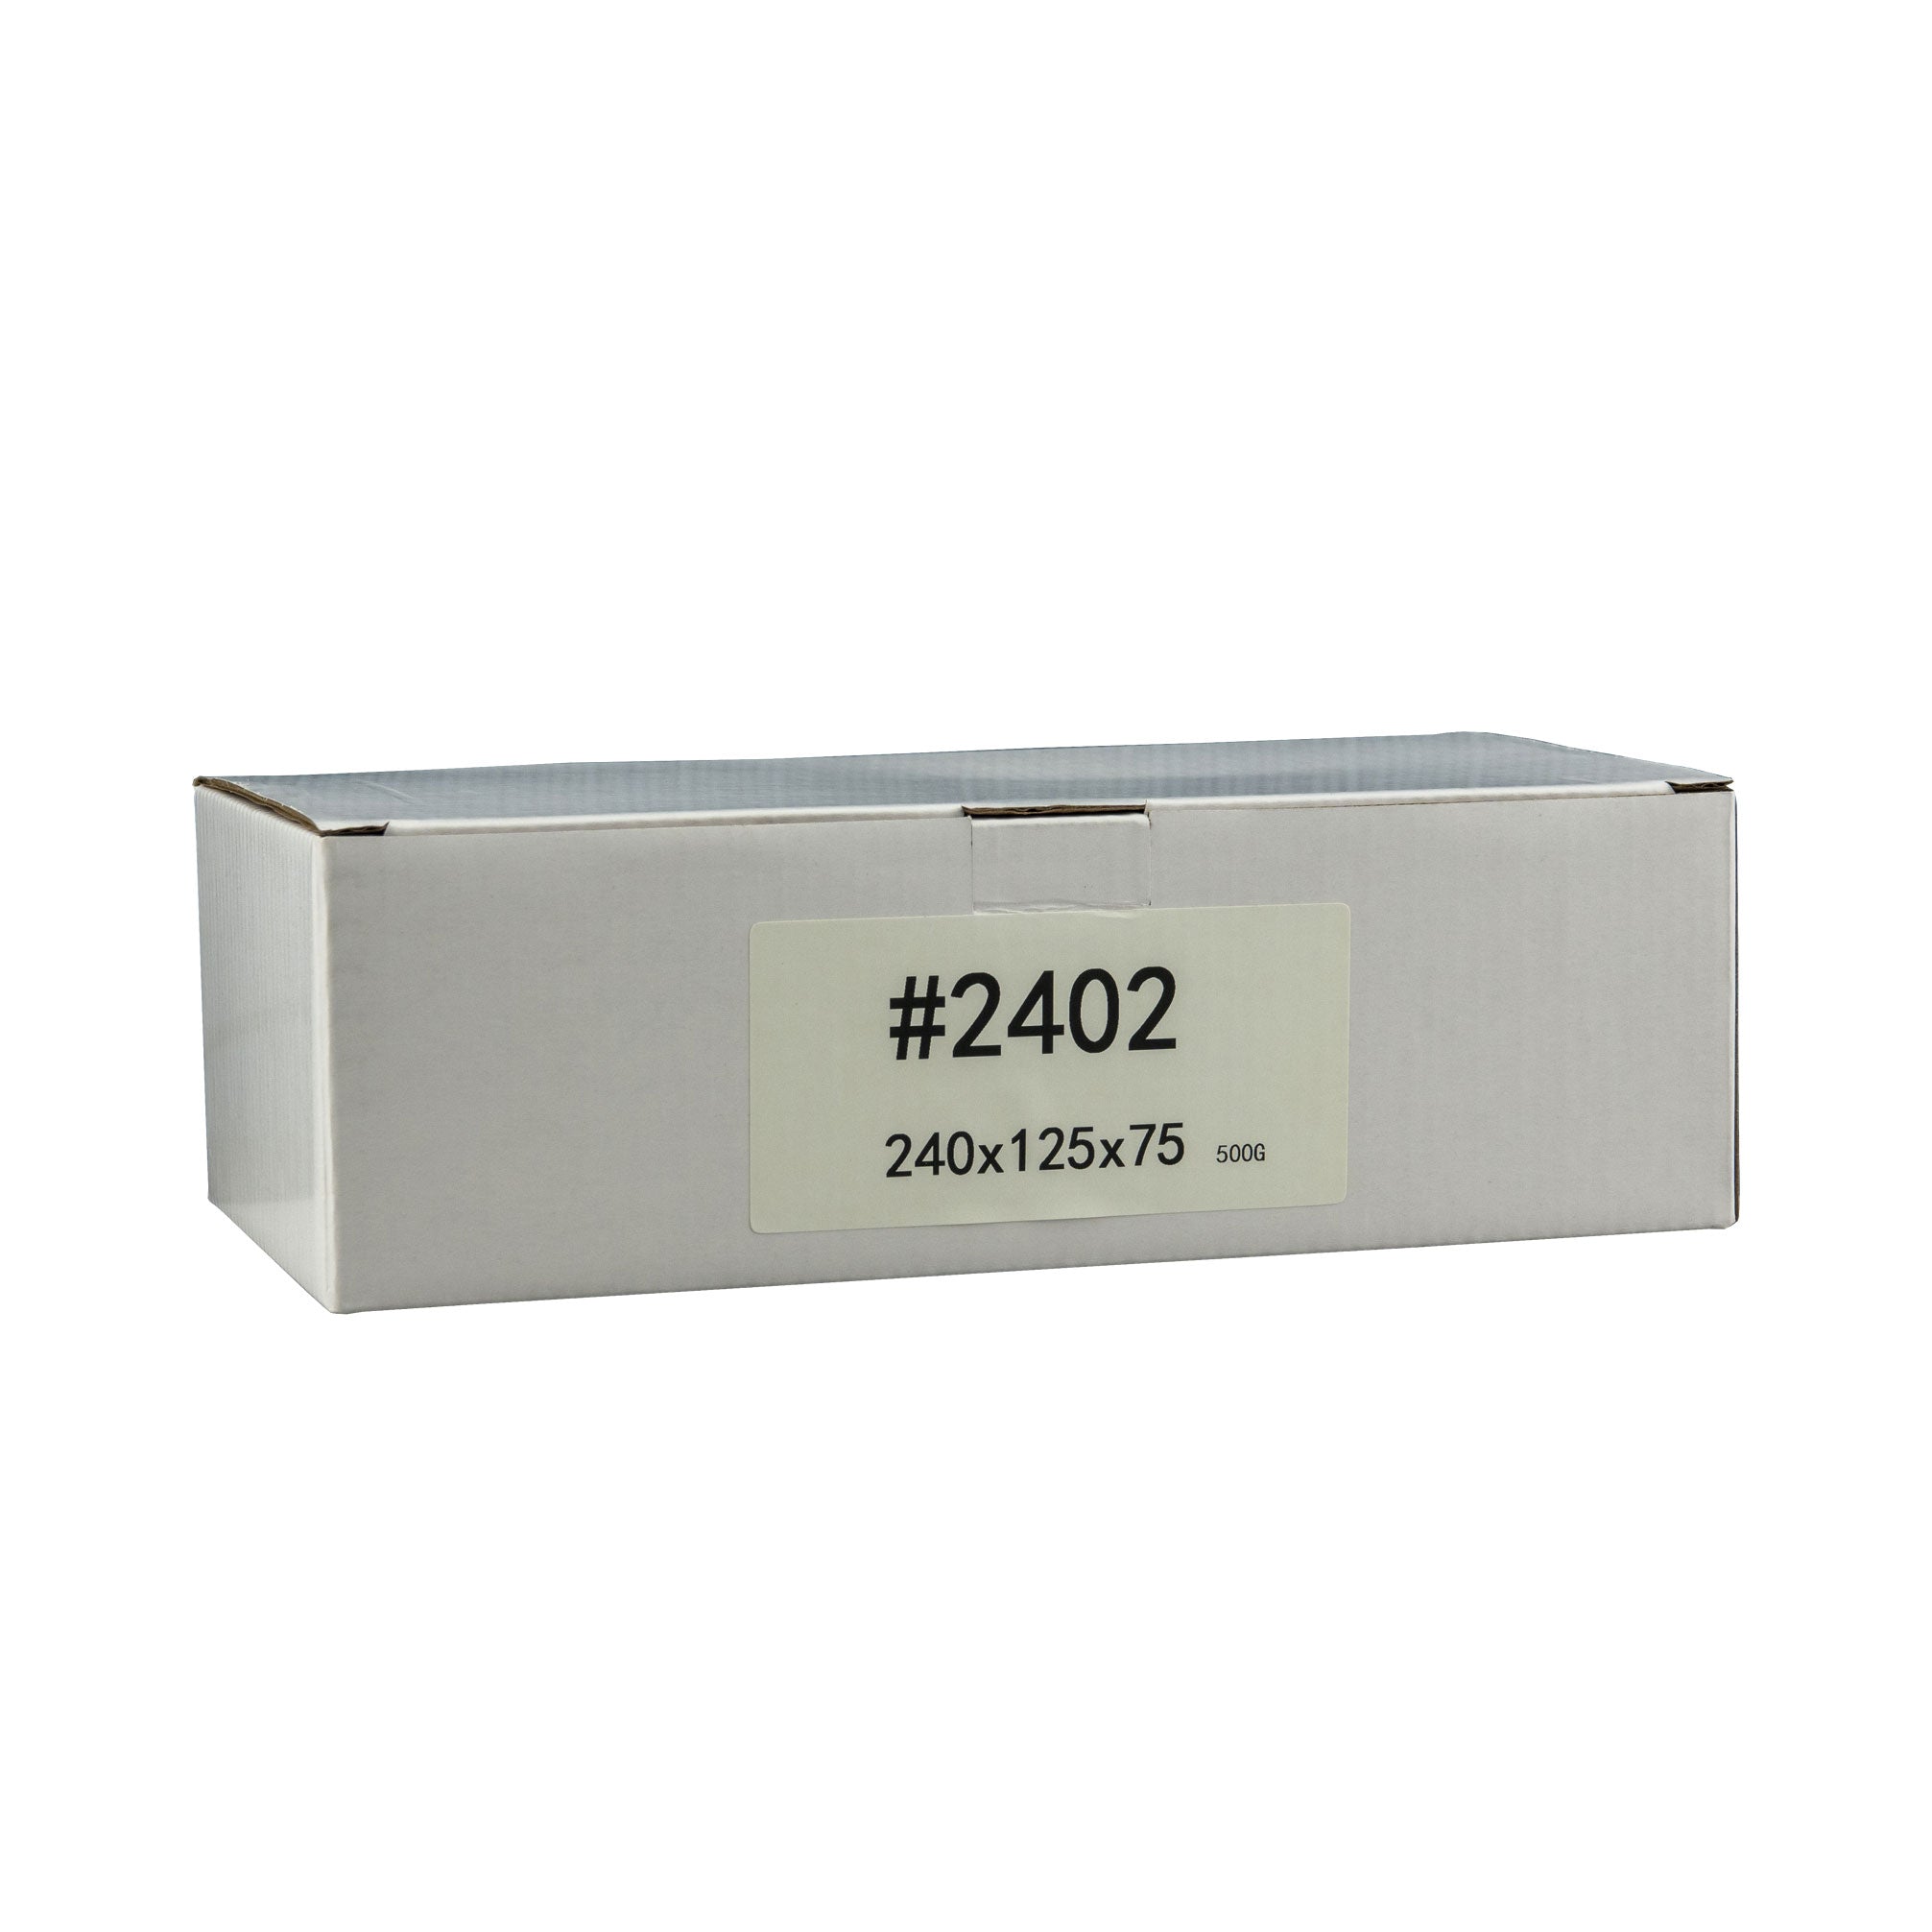 240mm x 125mm x 75mm White Carton Cardboard Shipping Box (#2402) for 500G Satchel